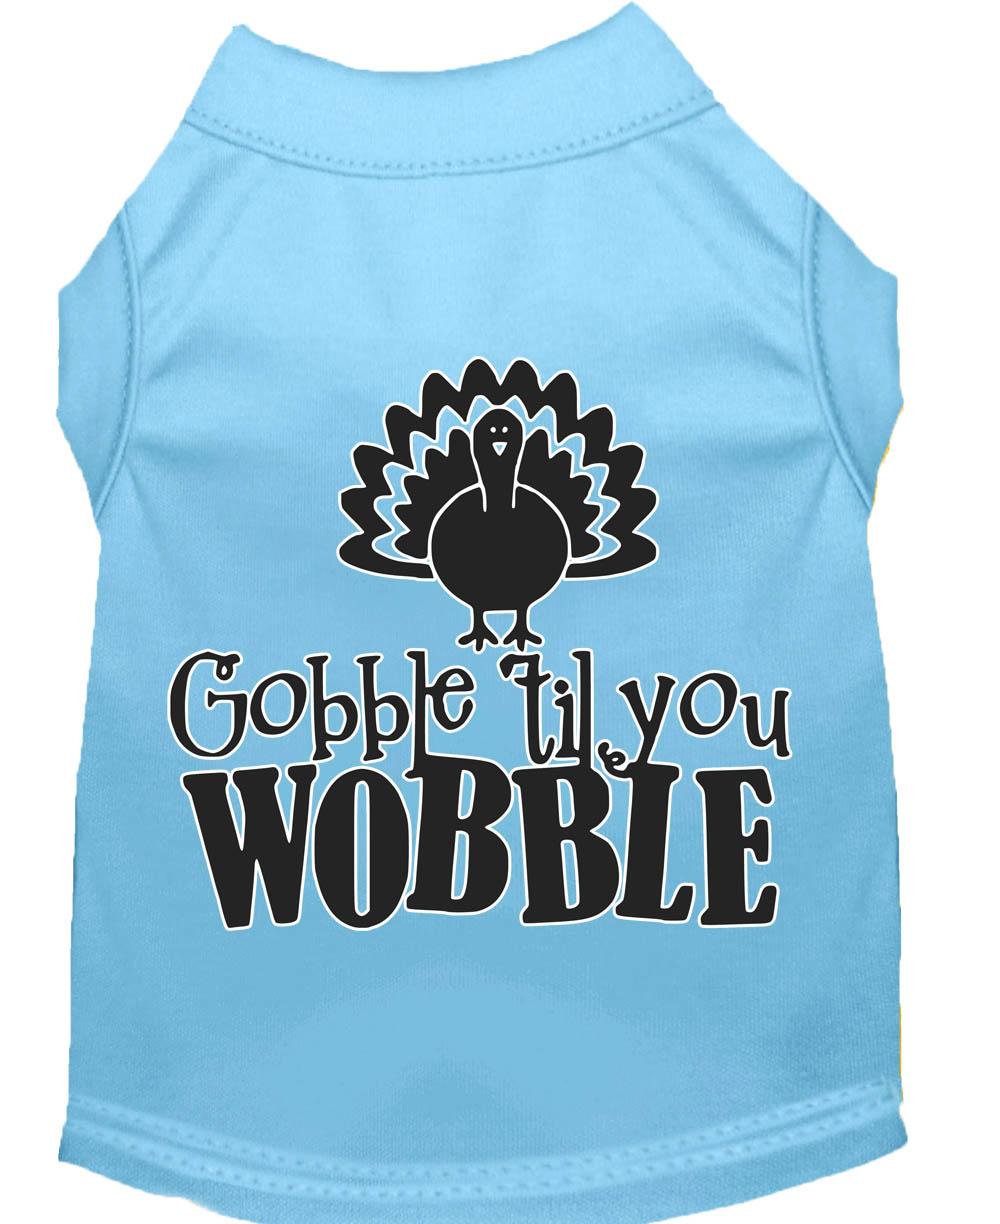 Gobble til You Wobble Screen Print Dog Shirt Baby Blue Lg